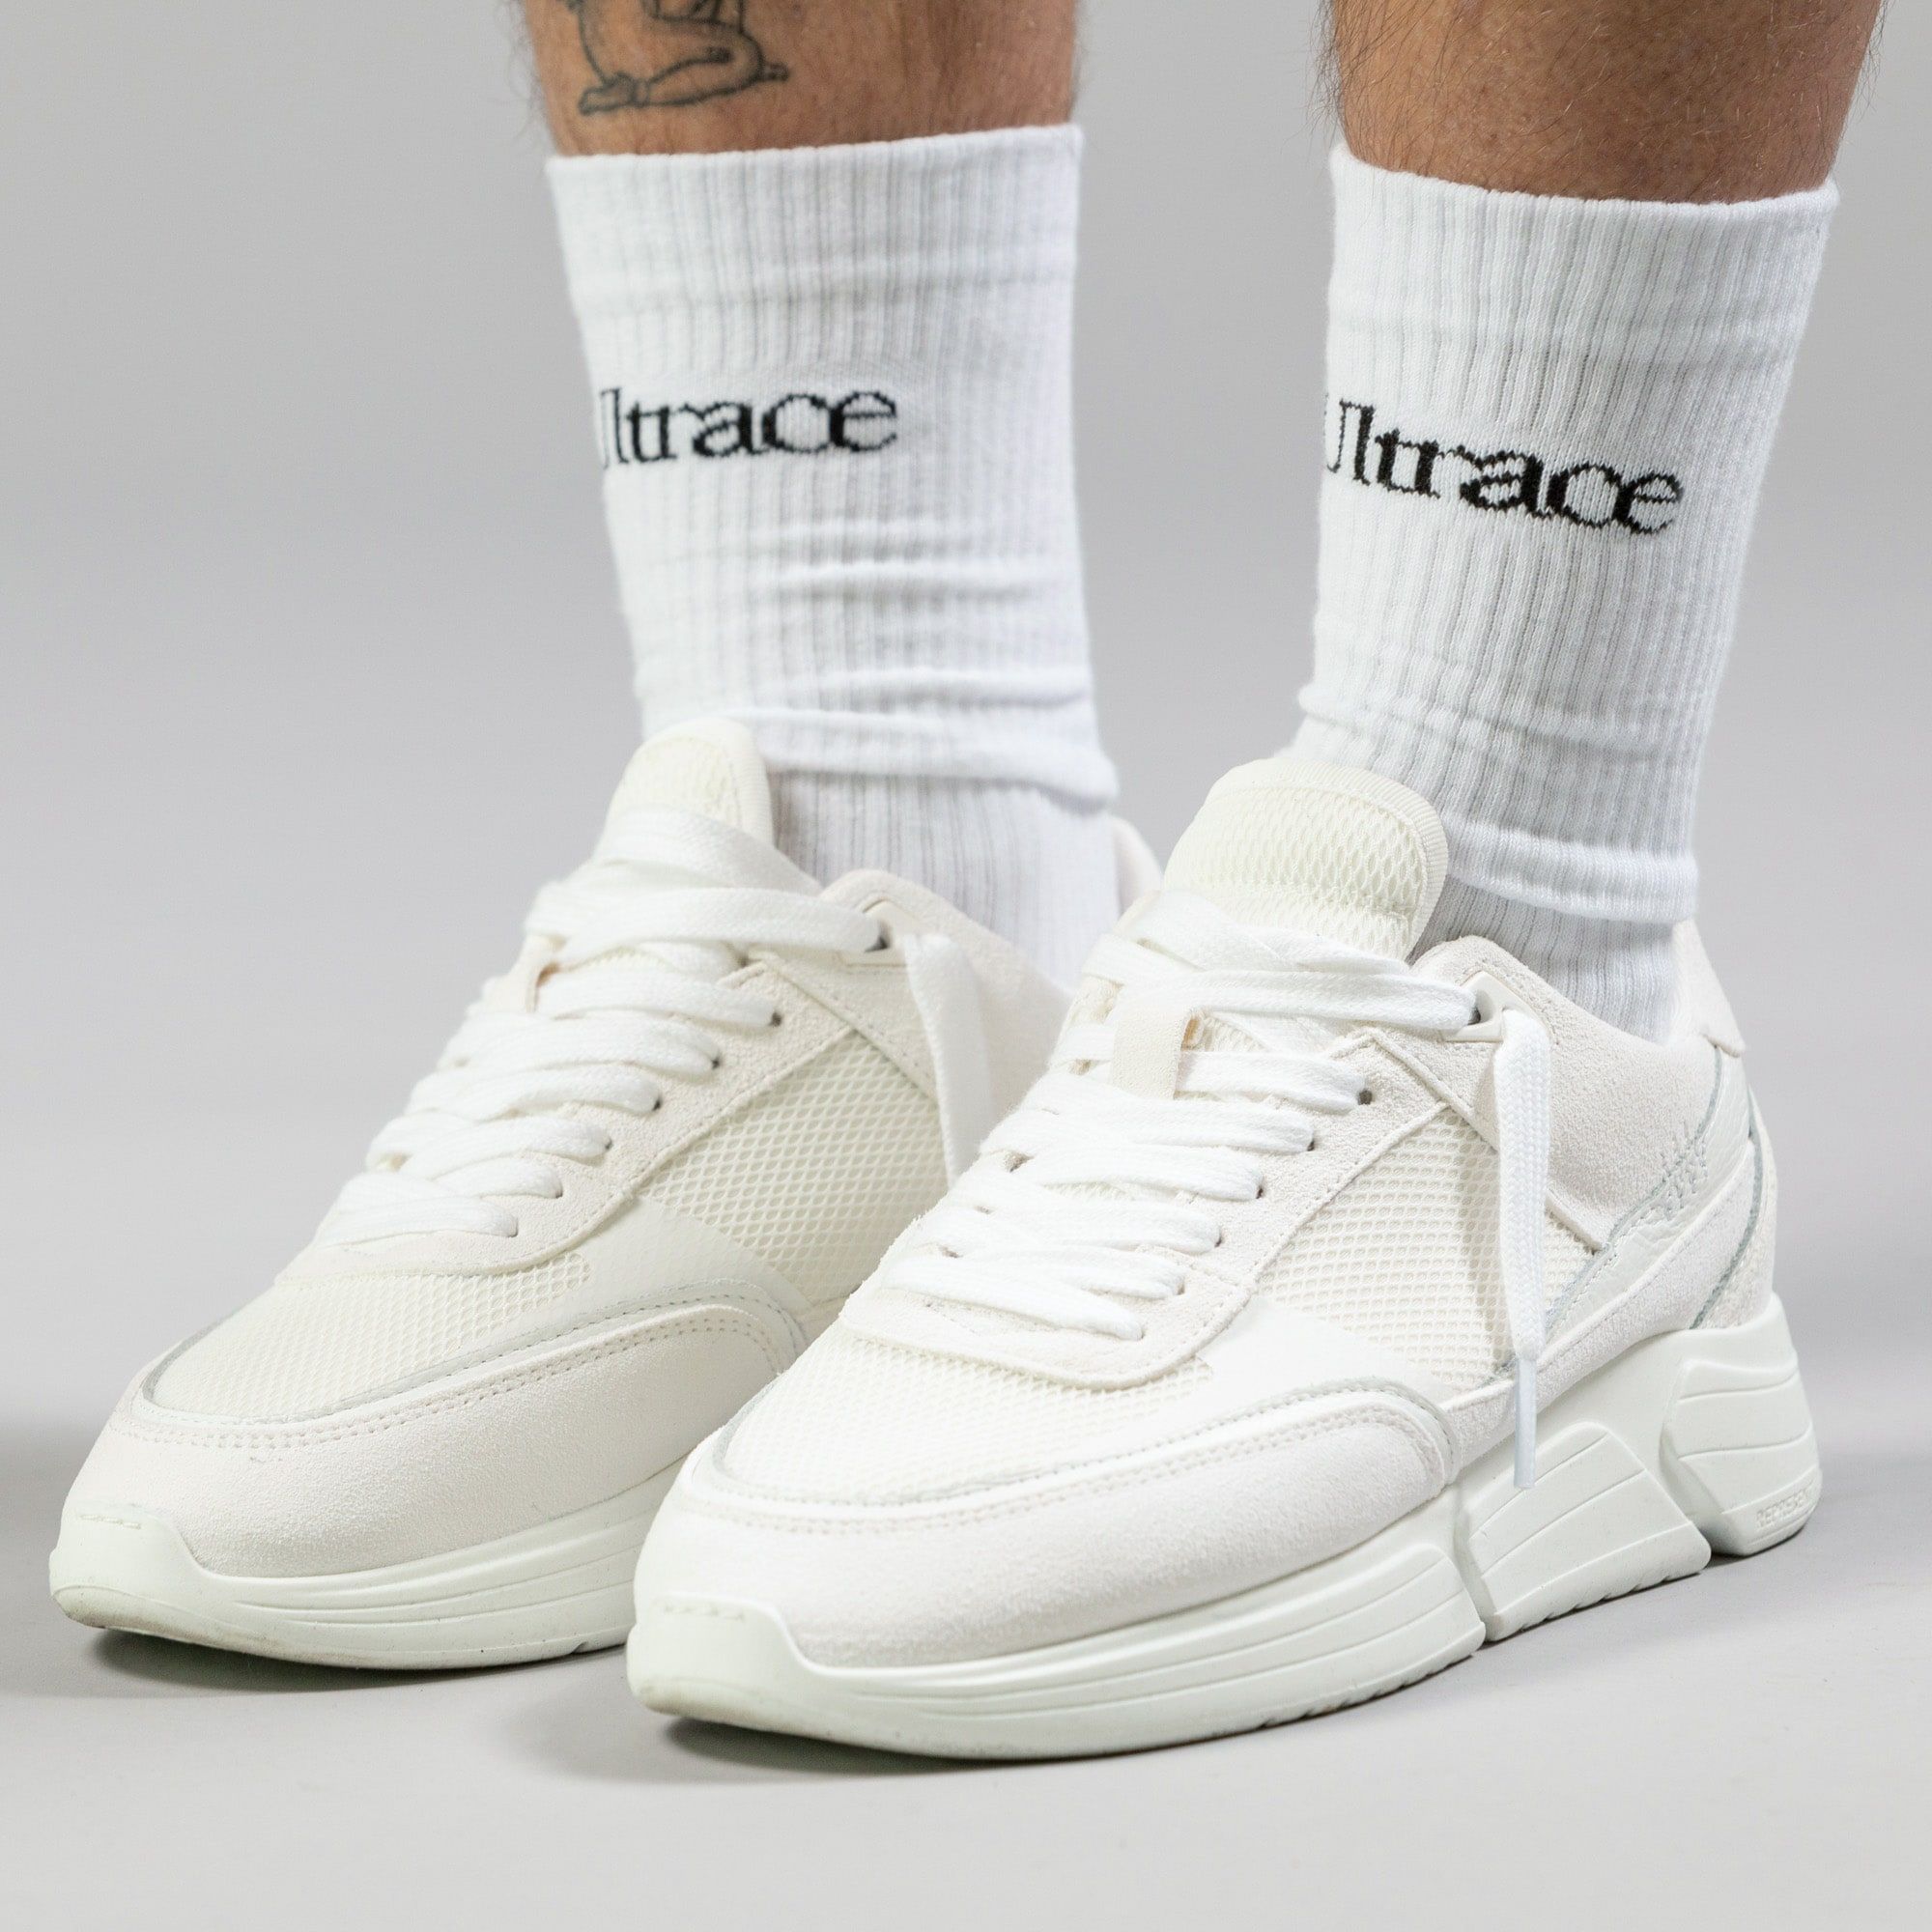 Ultrace Socks